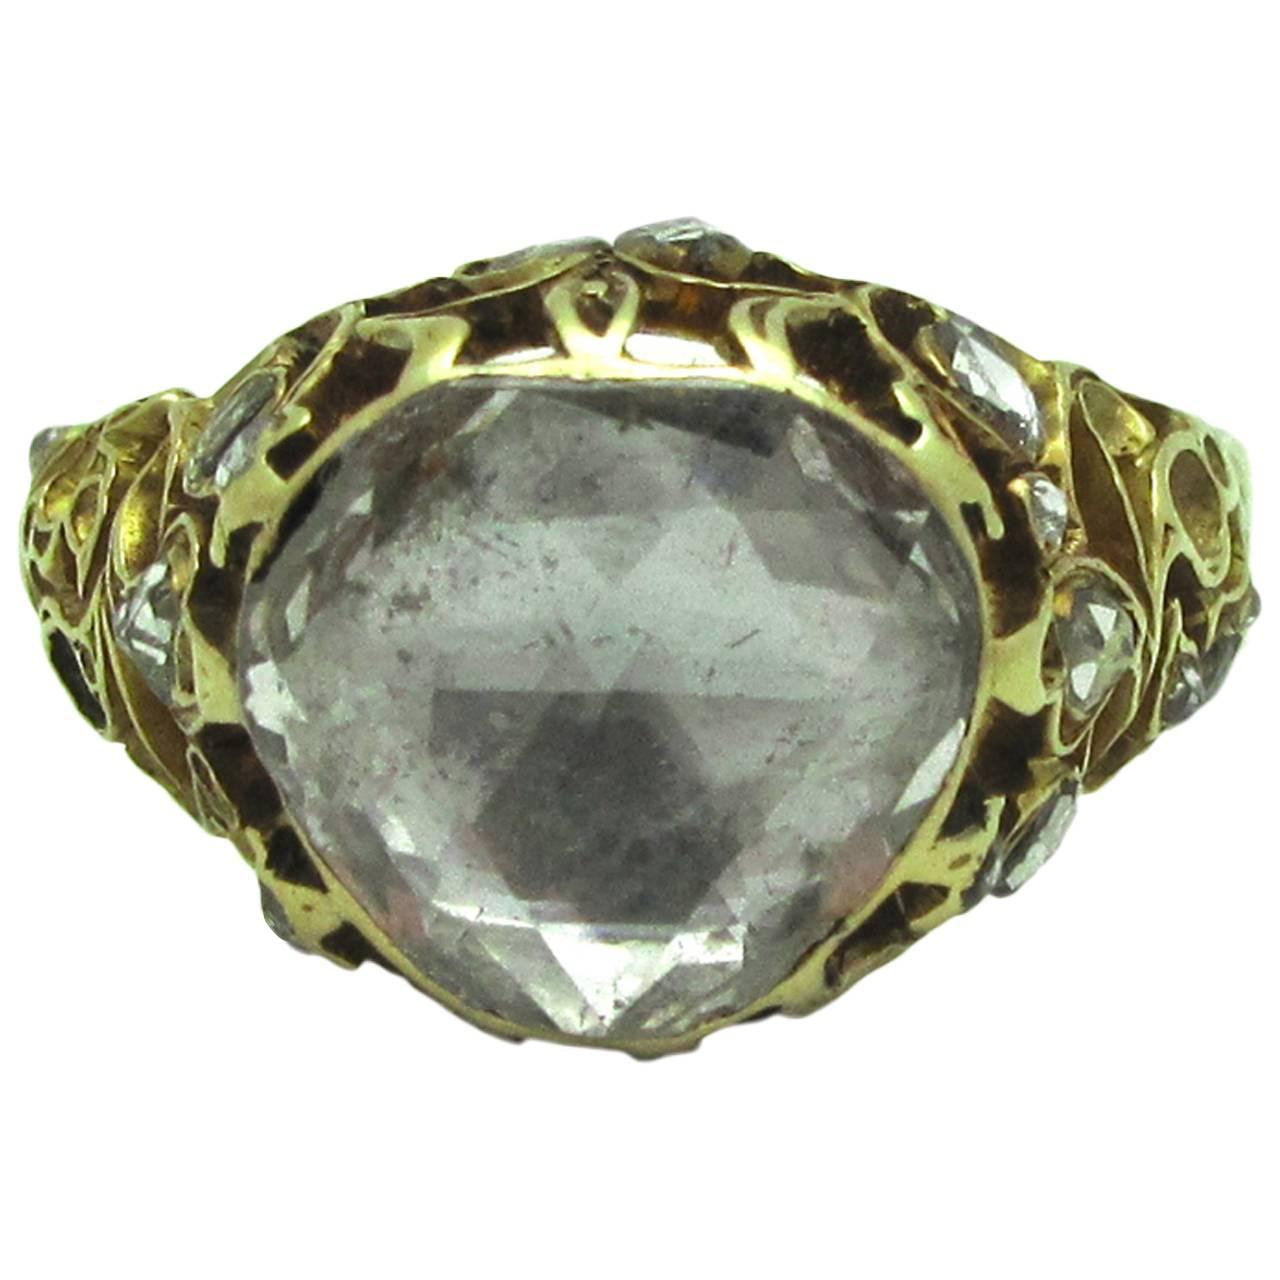 2.7 carat diamond ring